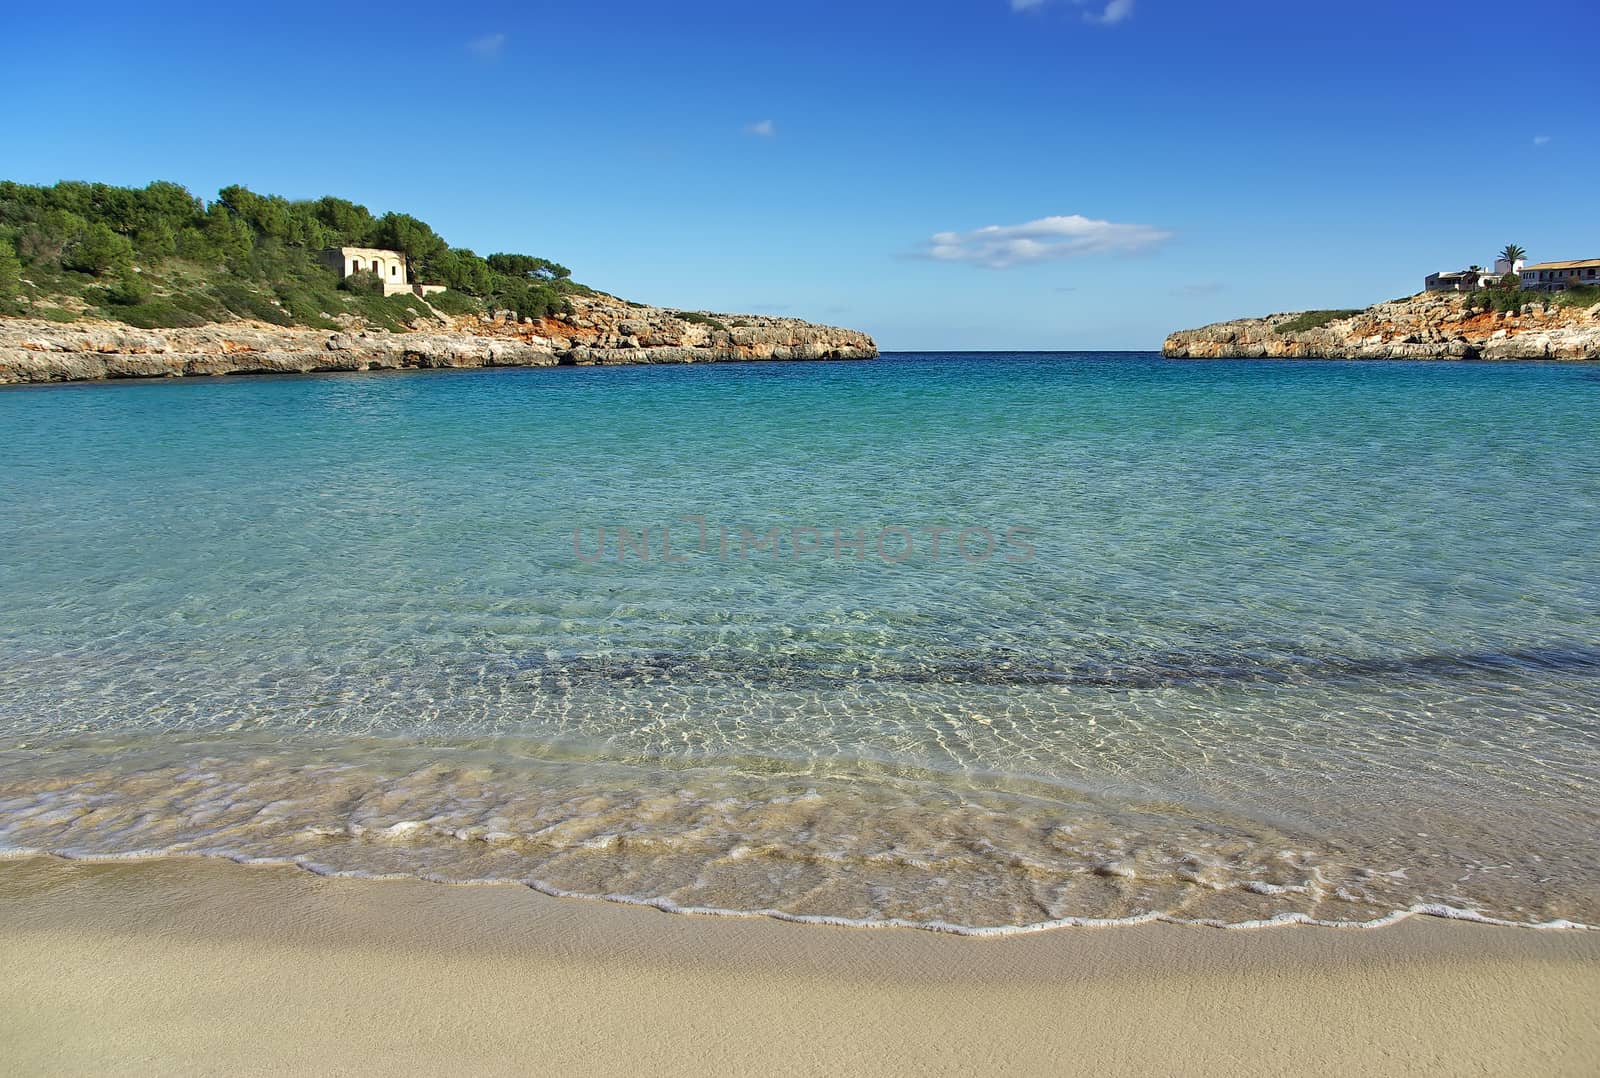 Cala Marsal beach in the Mediterranean Sea (Majorca - Spain)